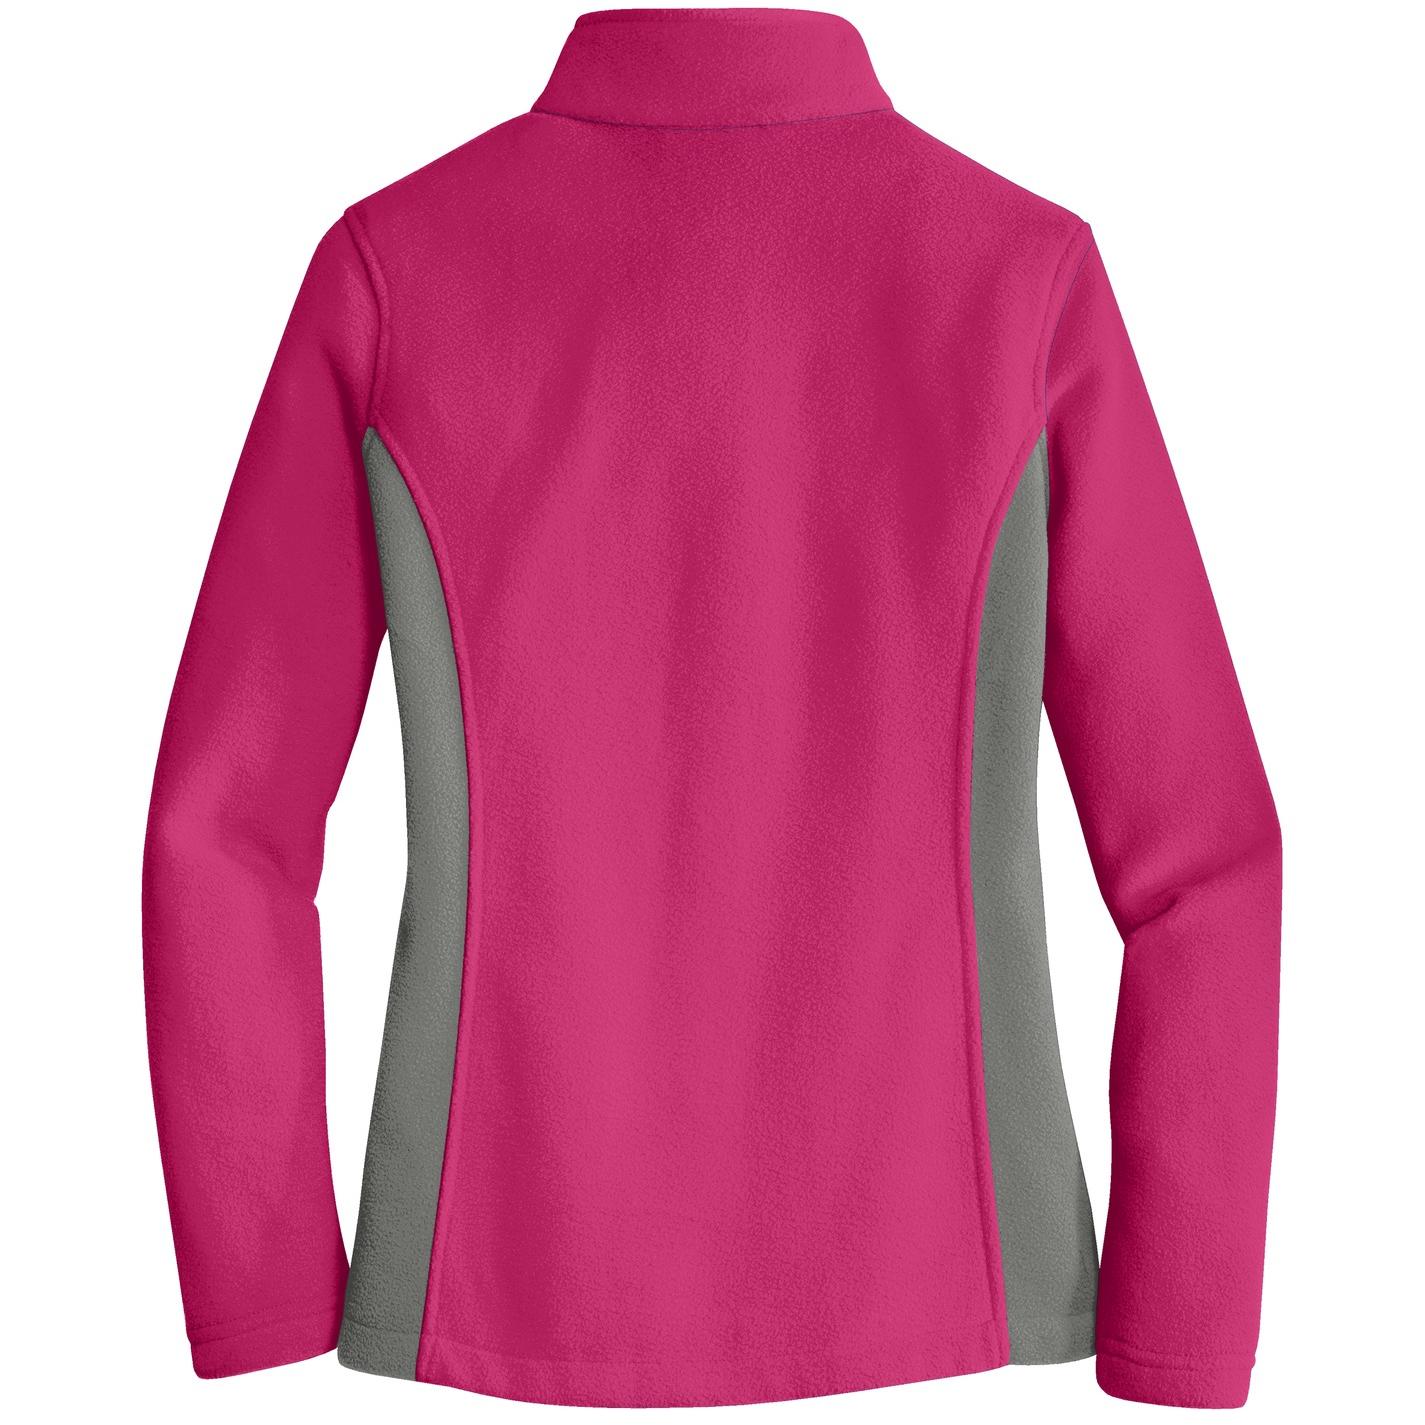 Port Authority ® Ladies Colorblock Value Fleece Jacket. L216